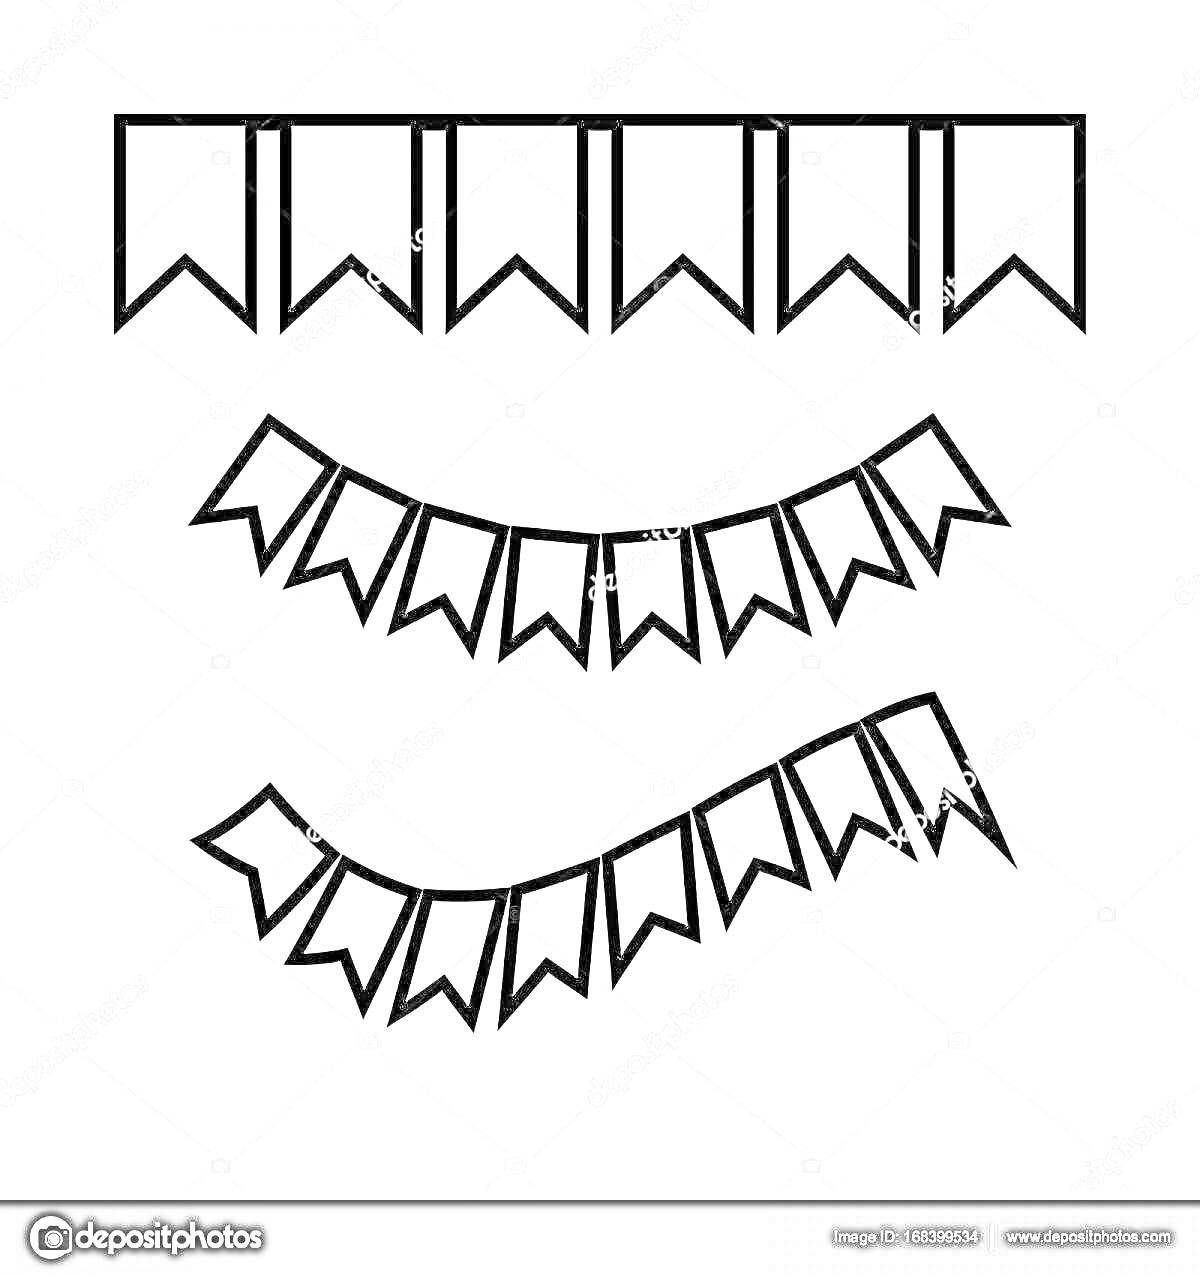 Раскраска Флажки на ниточке: верхняя прямая гирлянда, средняя наклонная гирлянда, нижняя изогнутая гирлянда